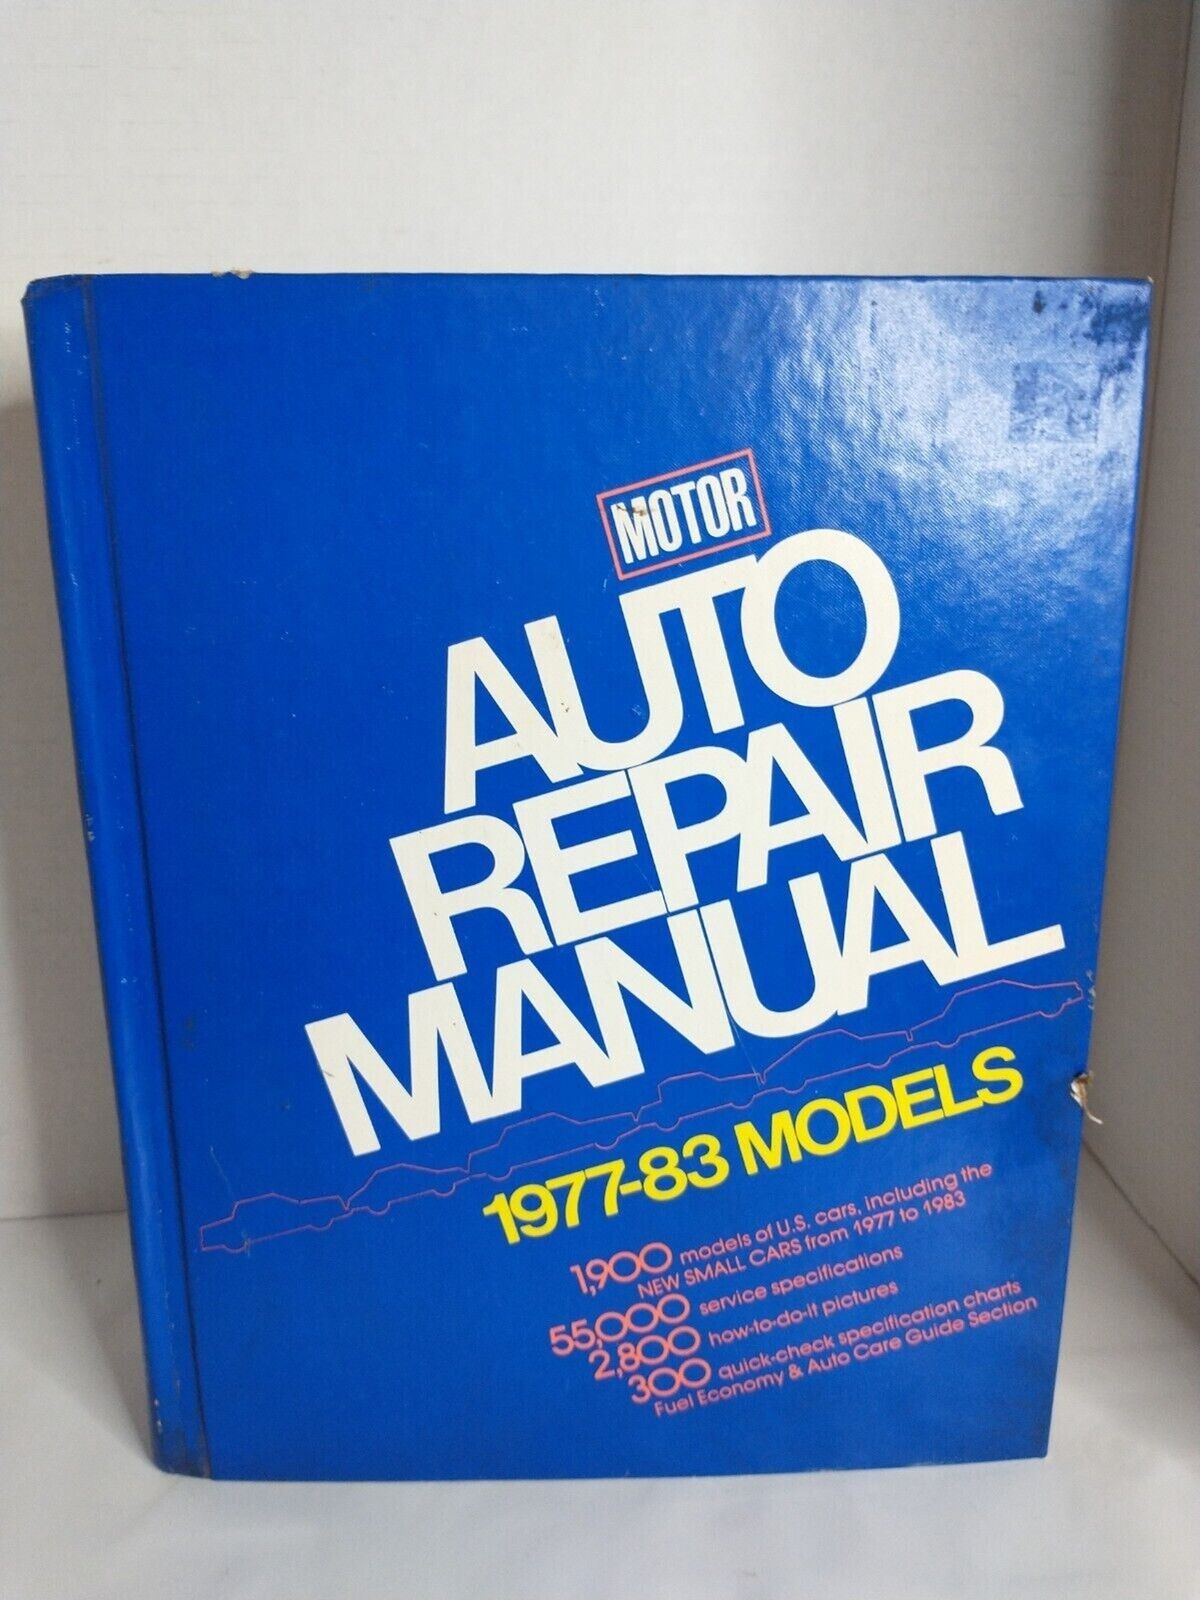 VINTAGE 1982 MOTOR AUTO REPAIR MANUAL 1977-1983 MODELS HARDCOVER BOOK